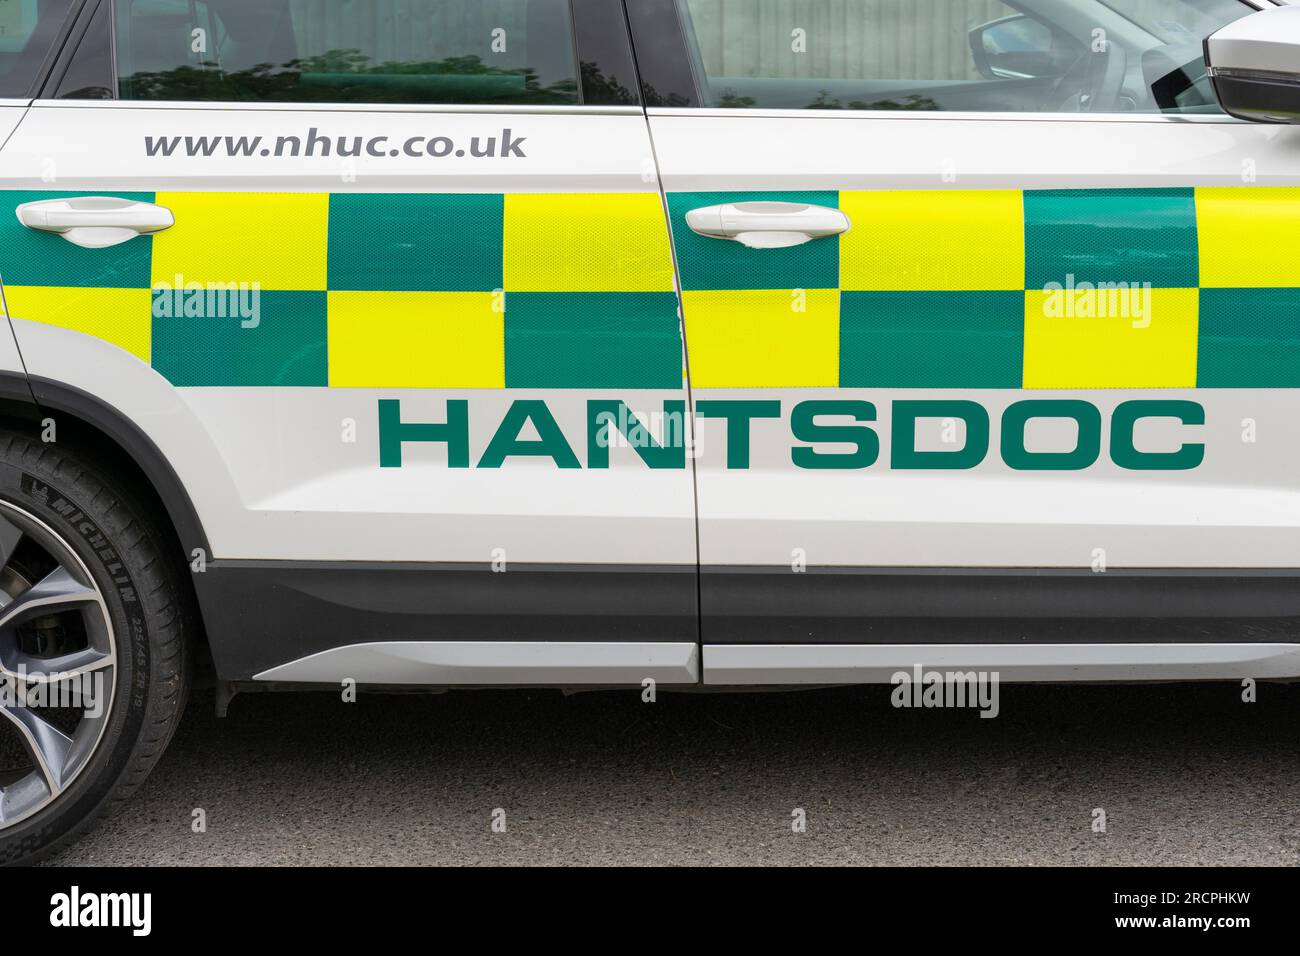 Hantsdoc doctors car for emergency visits at Hook Surgery, England. Hantsdoc provides the Out of Hours service for Basingstoke hospital Stock Photo